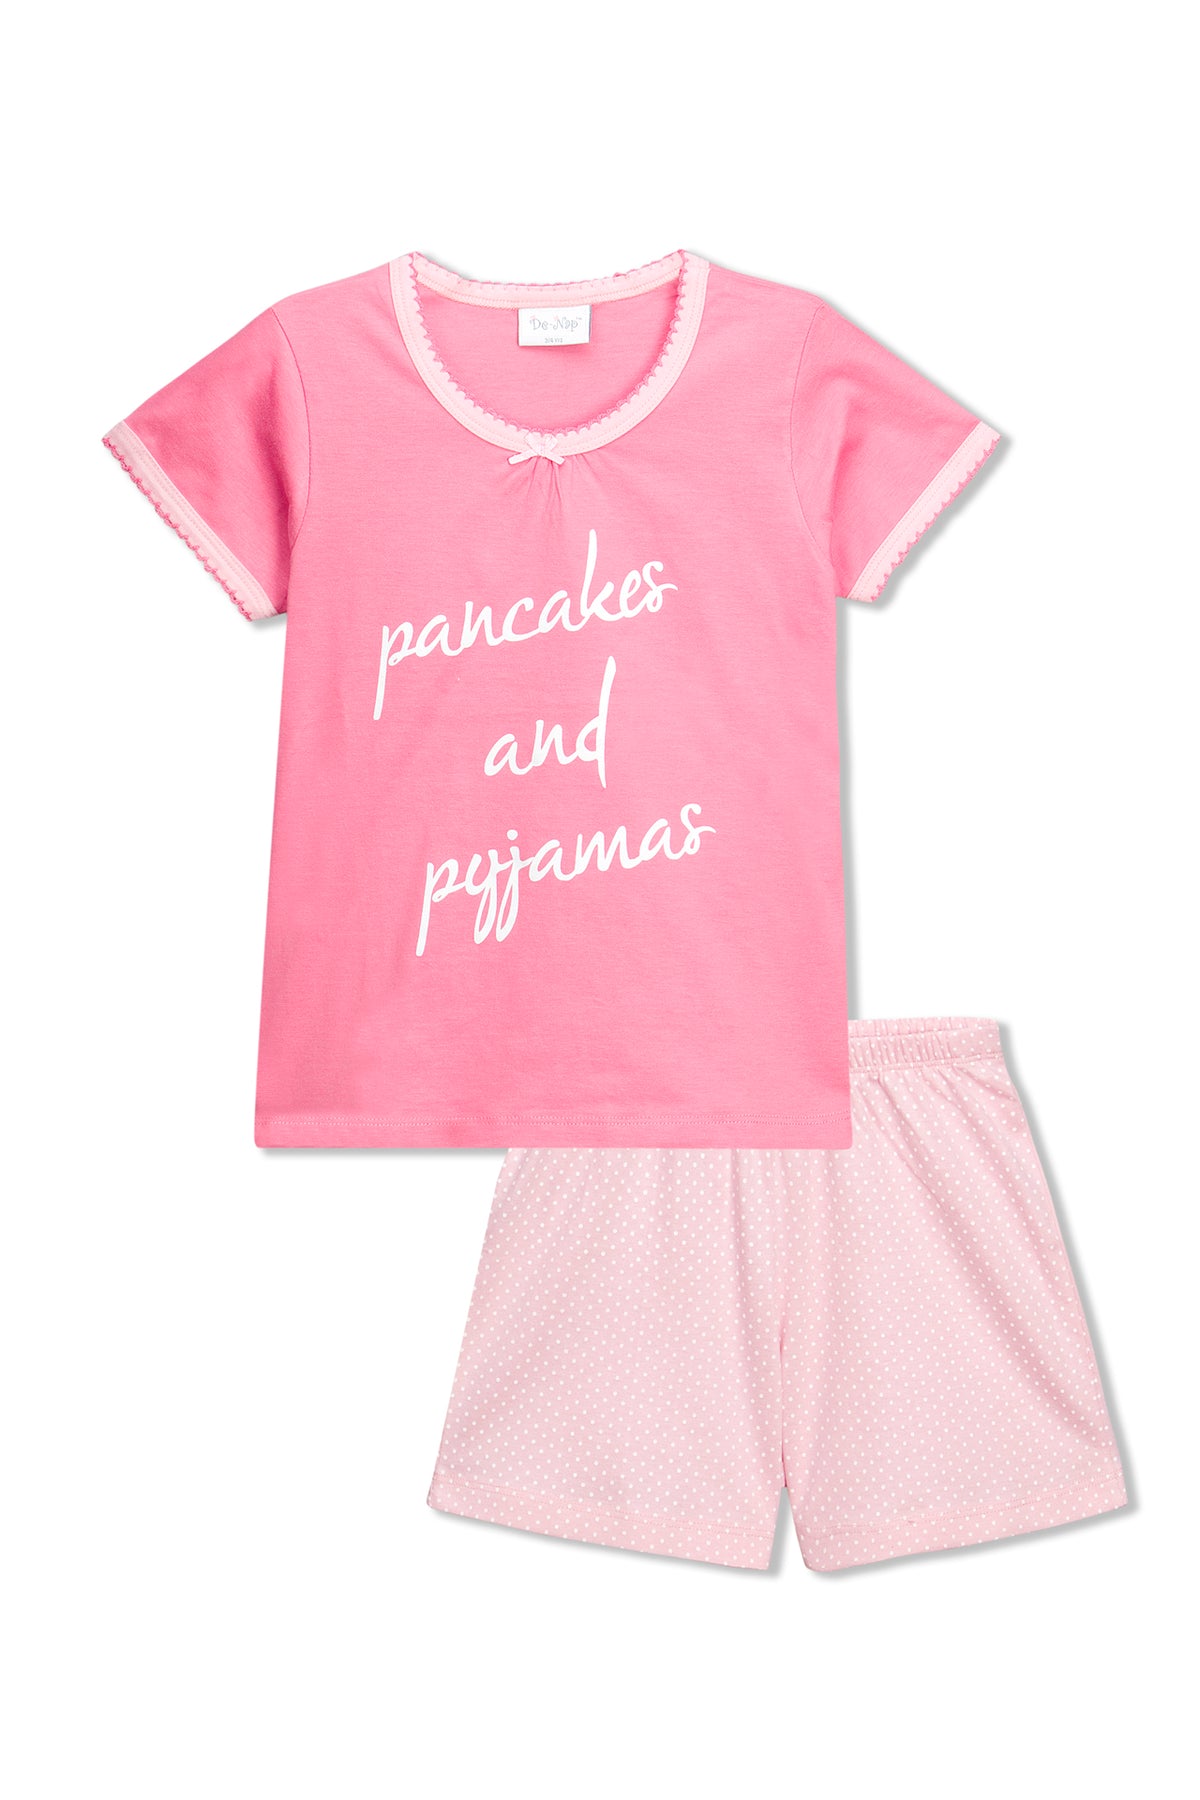 Pancakes & Pyjama Shorts Set